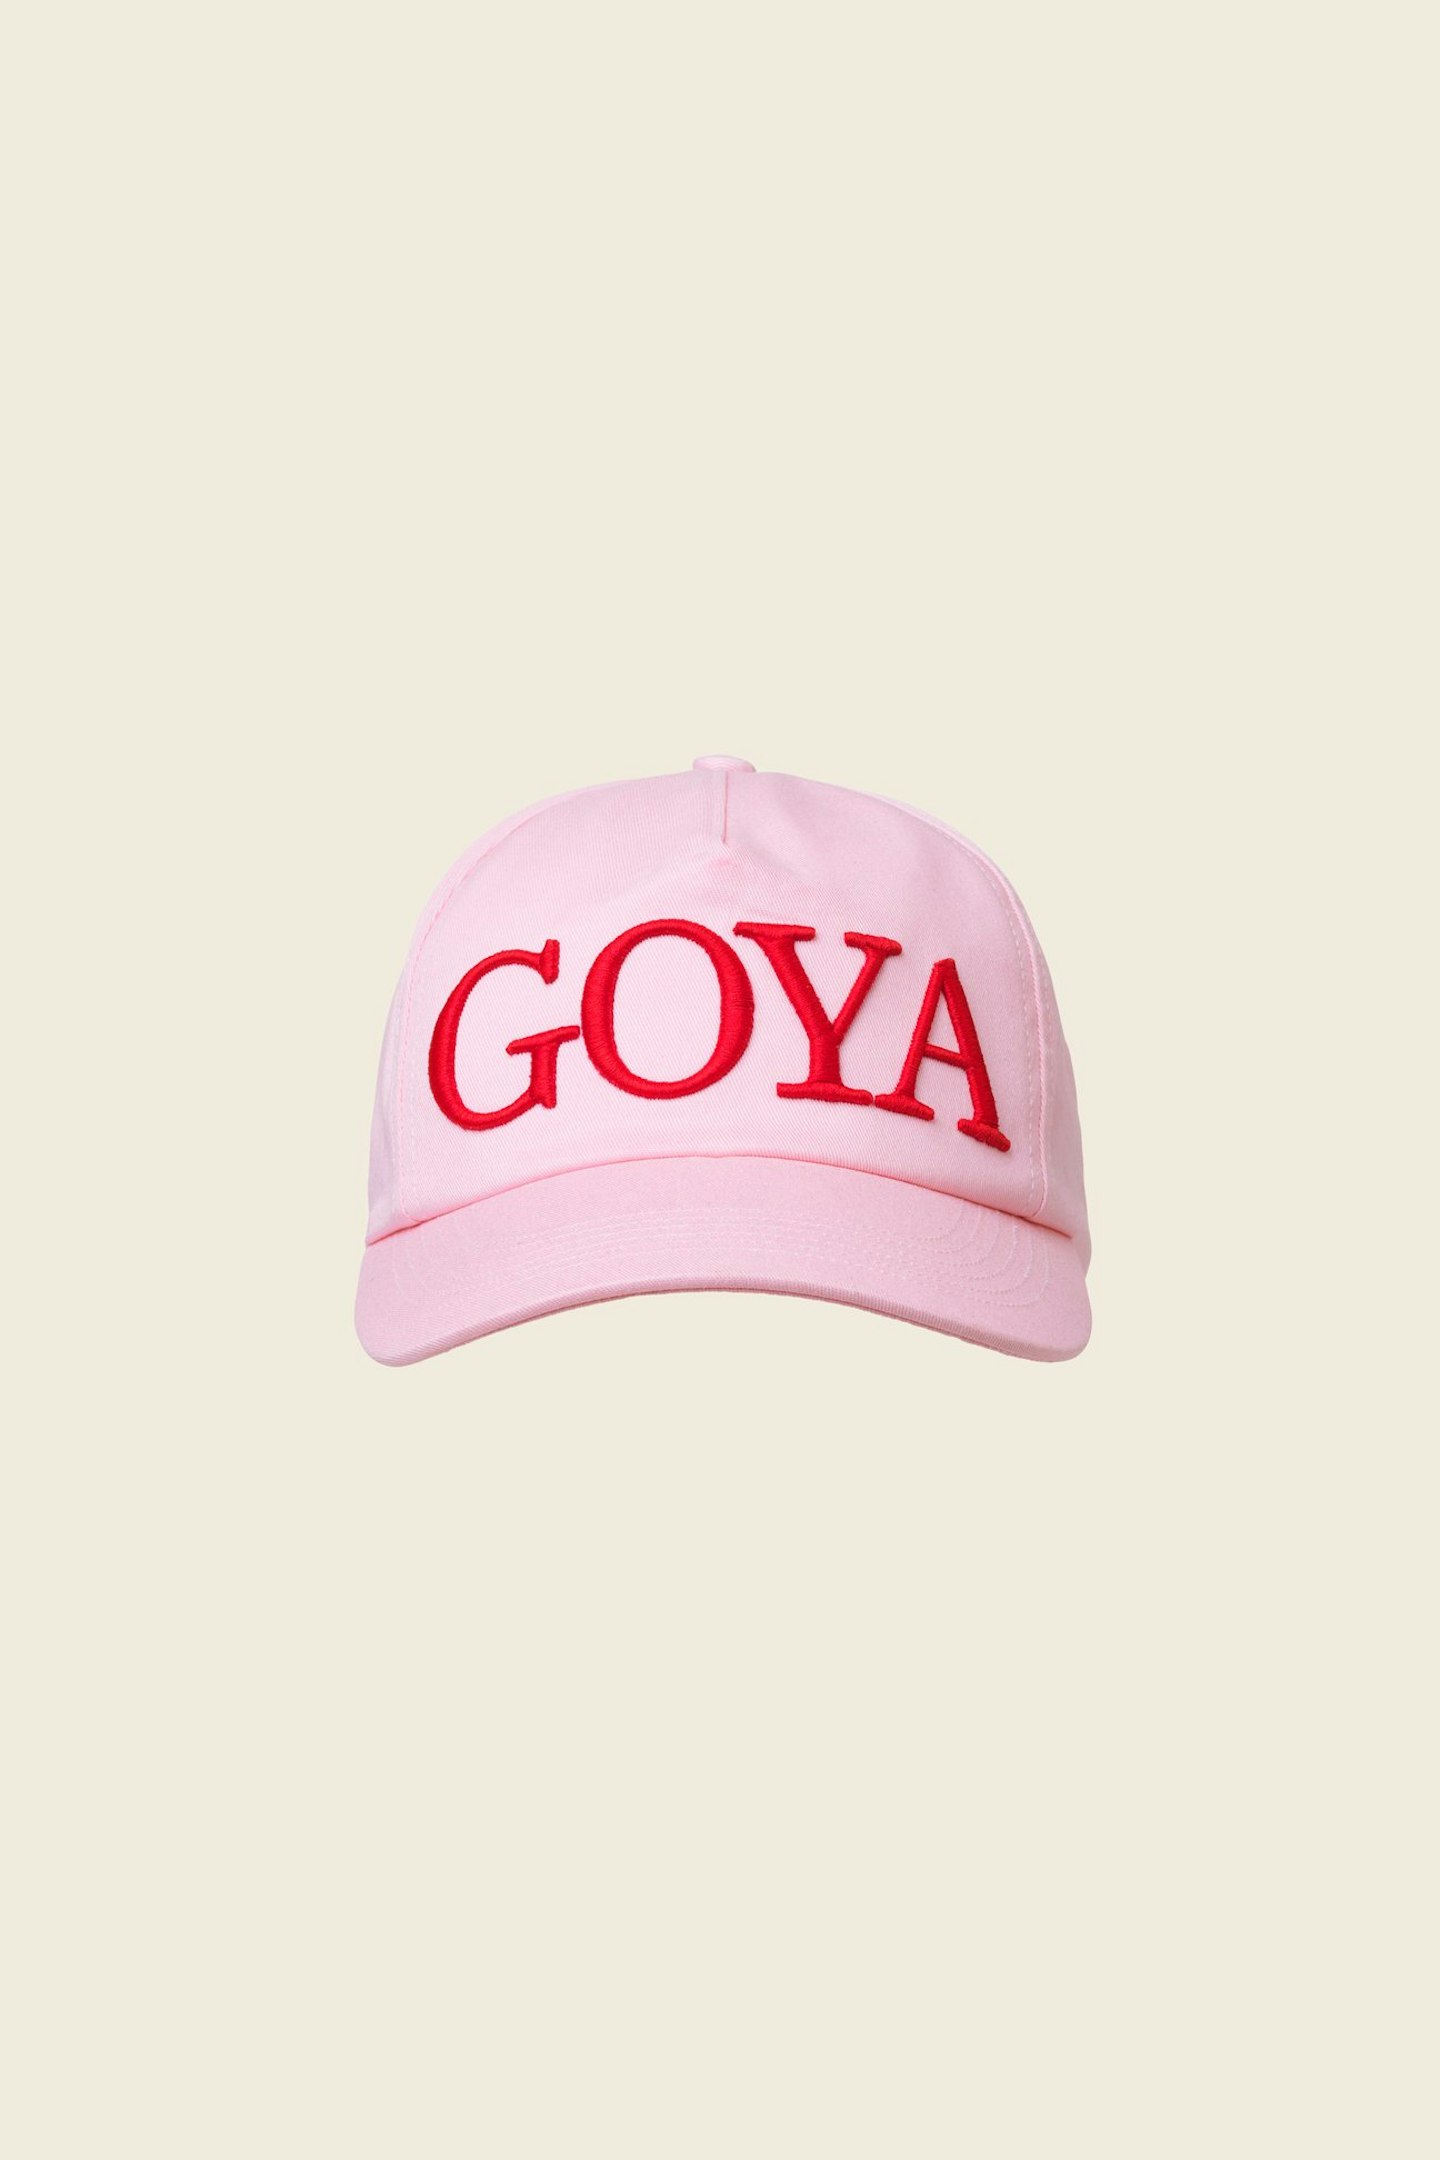 Stine Goya, Wet Paint Cap, £60